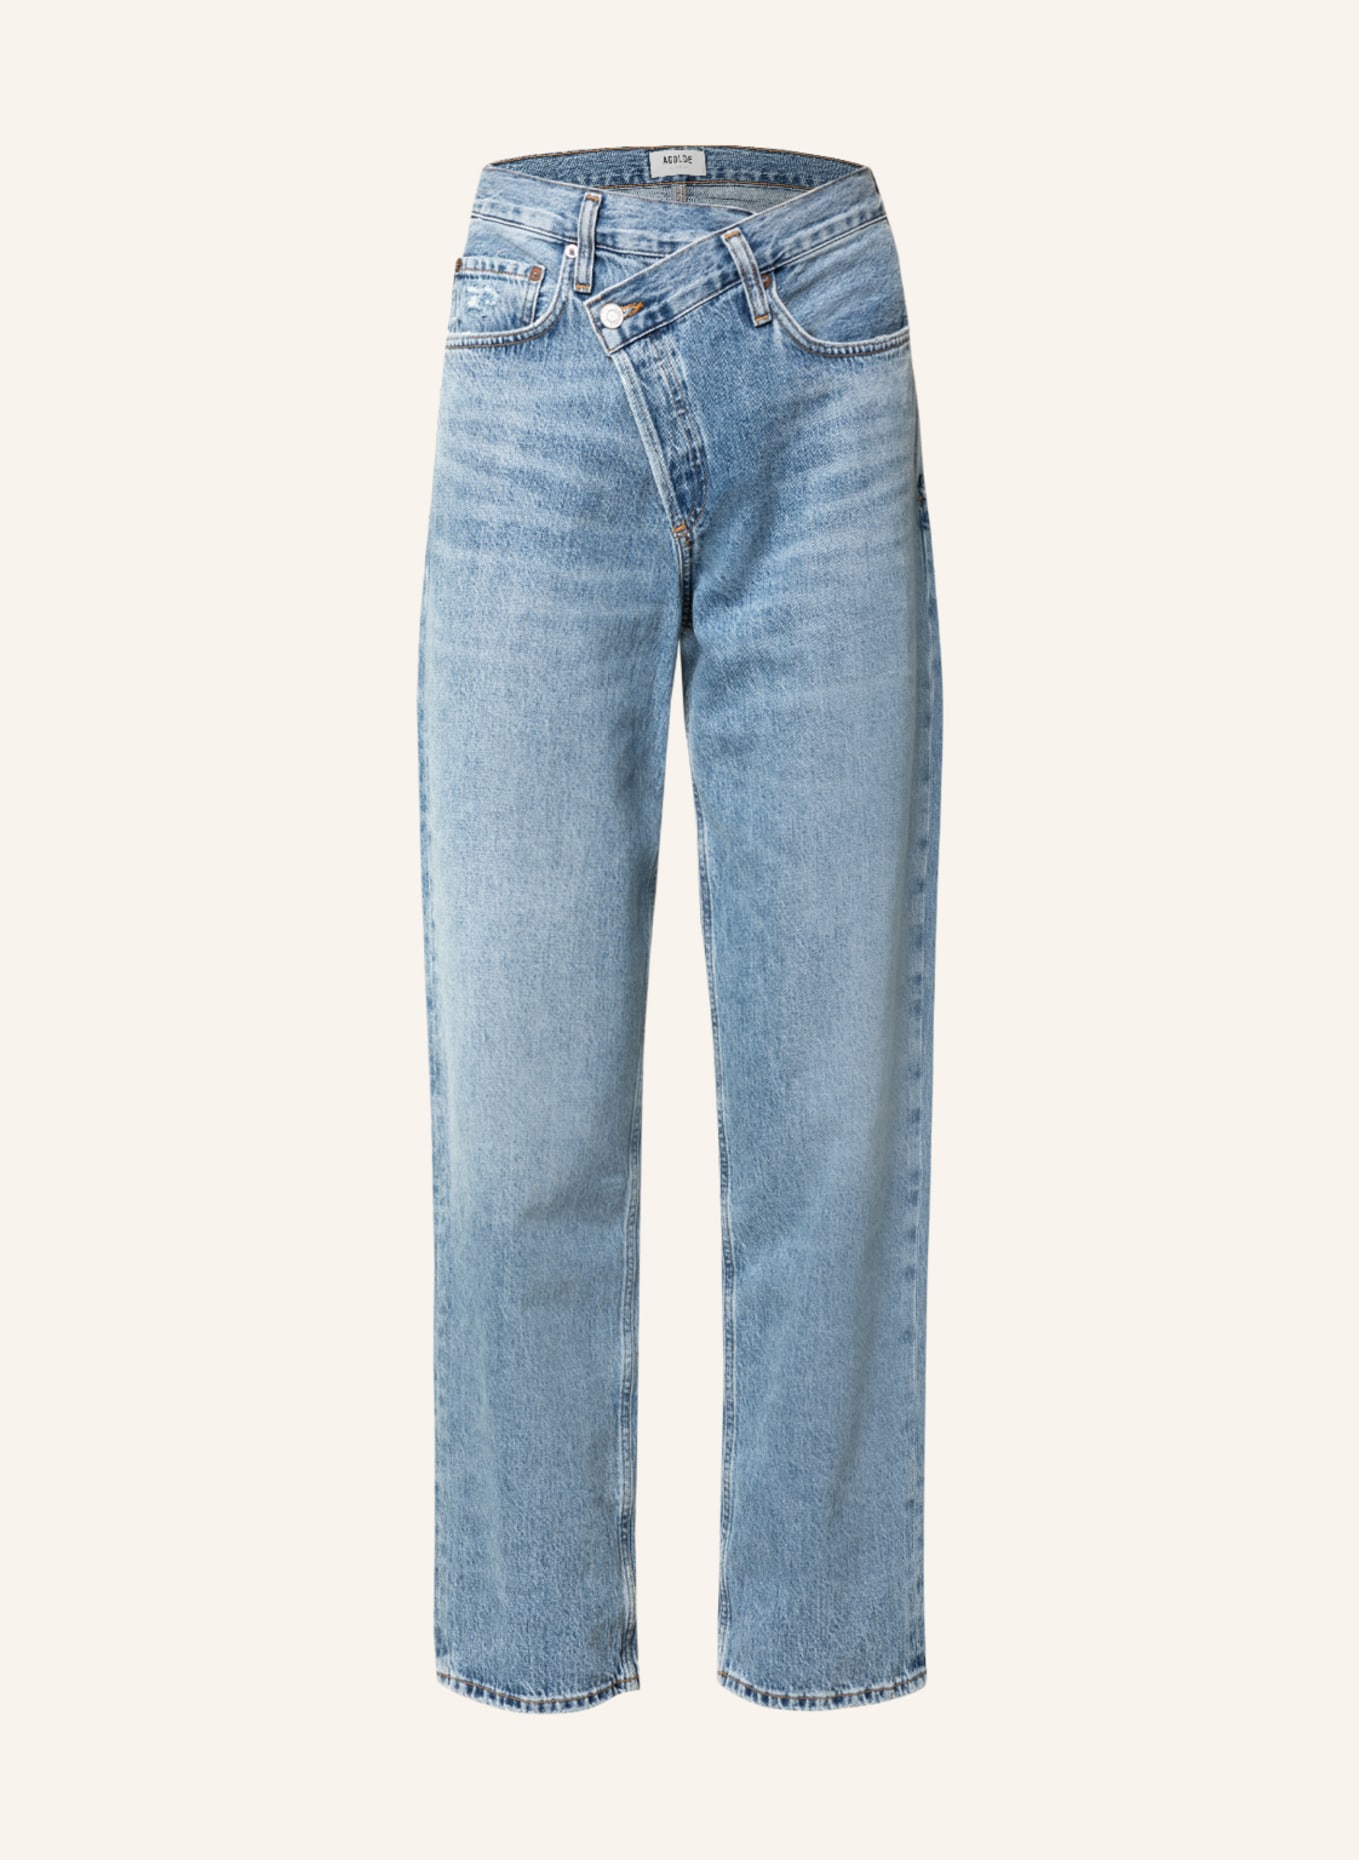 AGOLDE Straight Jeans CRISS CROSS, Farbe: ETERNAL ETERNAL (Bild 1)